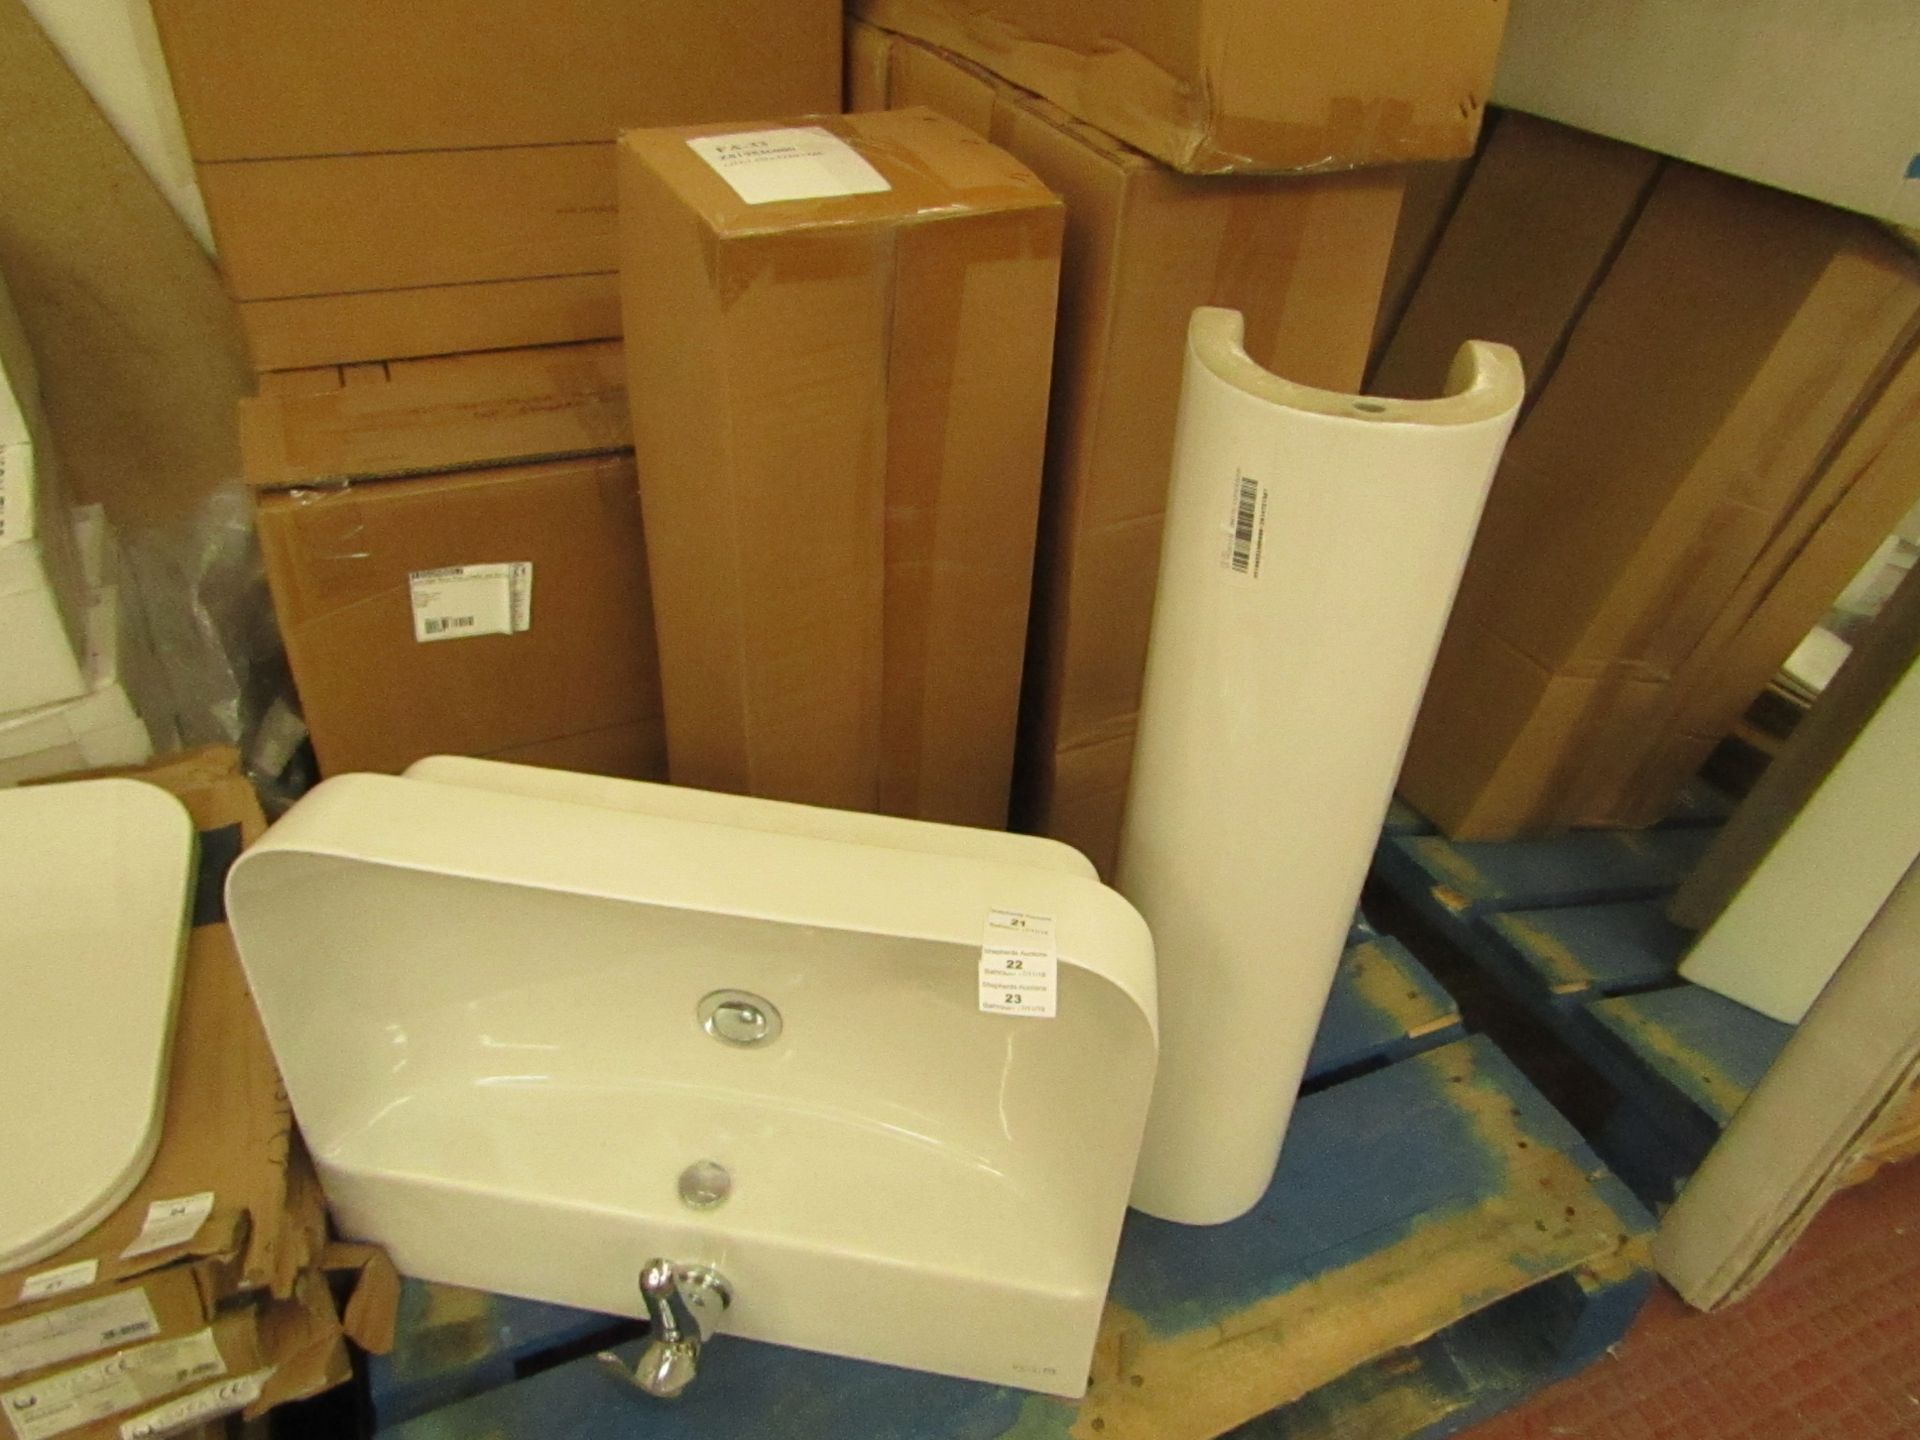 Bathroom sink set containing; isvea 570mm basin, mono mixer tap with waste trap, laufen universal